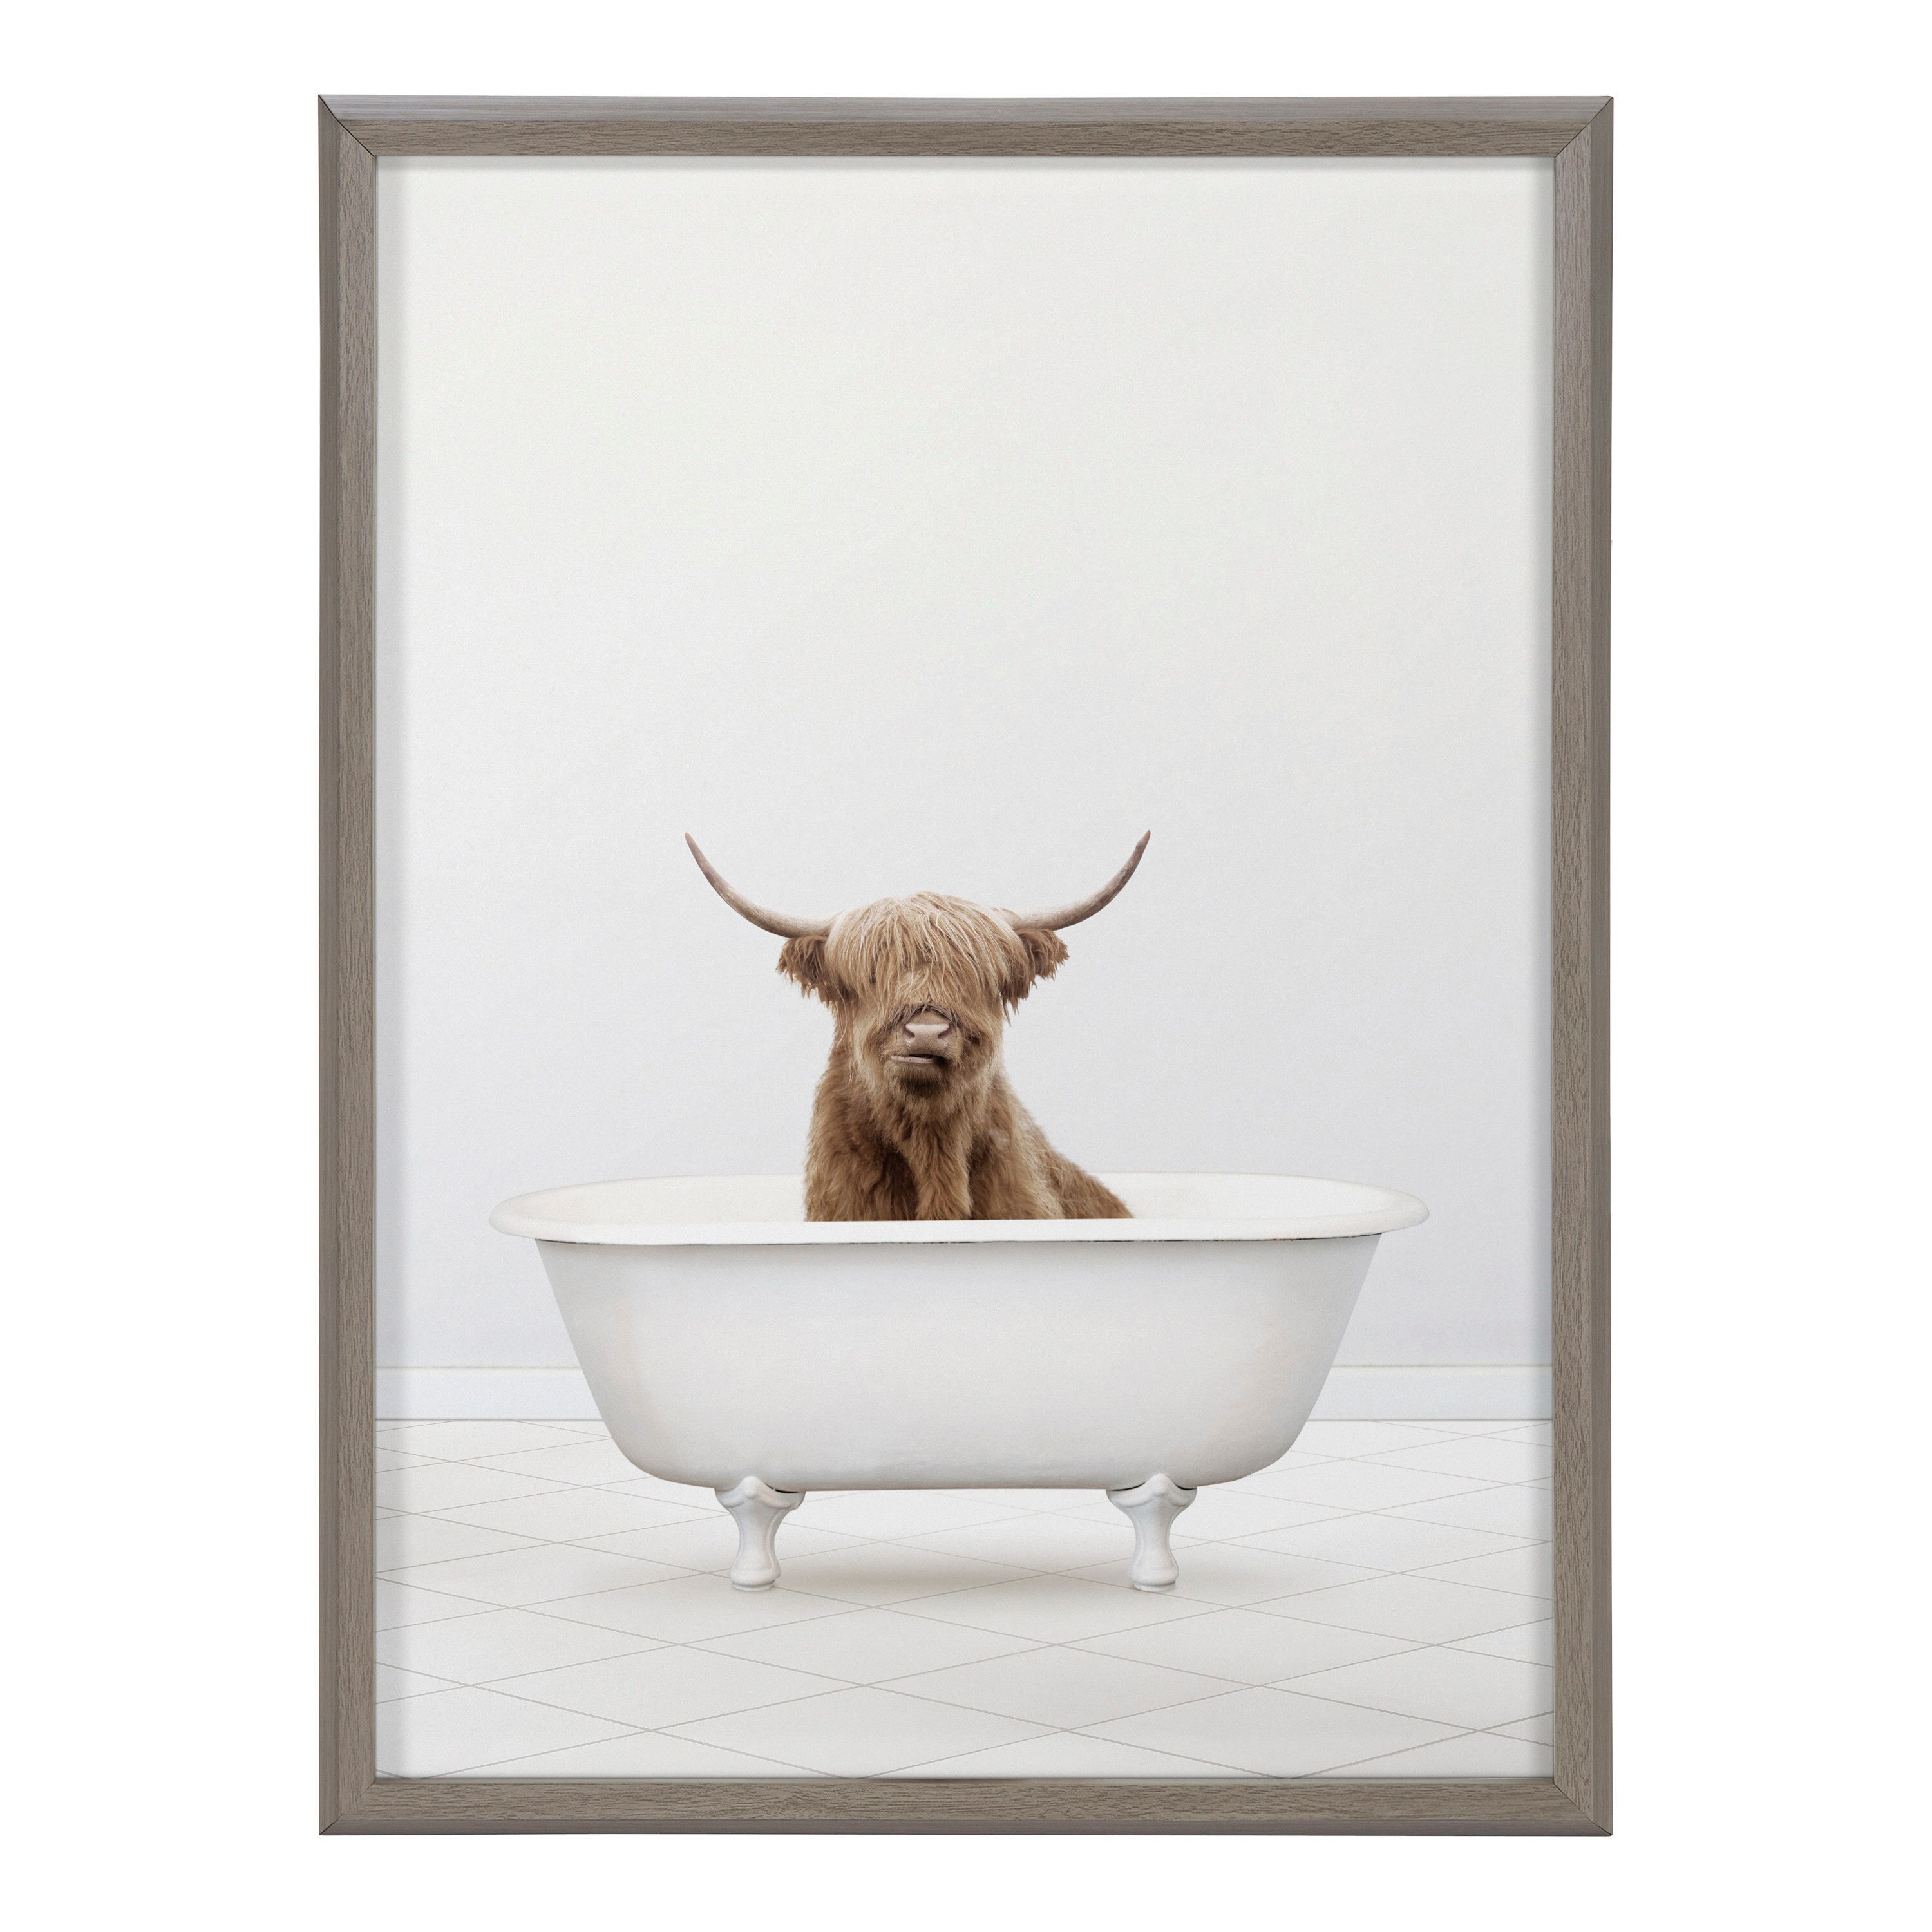 Bathroom Art Bathroom Wall Art Cow in Tub Cottage Rose Bath Animal Art by Amy Peterson Highland Cow with Duckling in a Vintage Bathtub